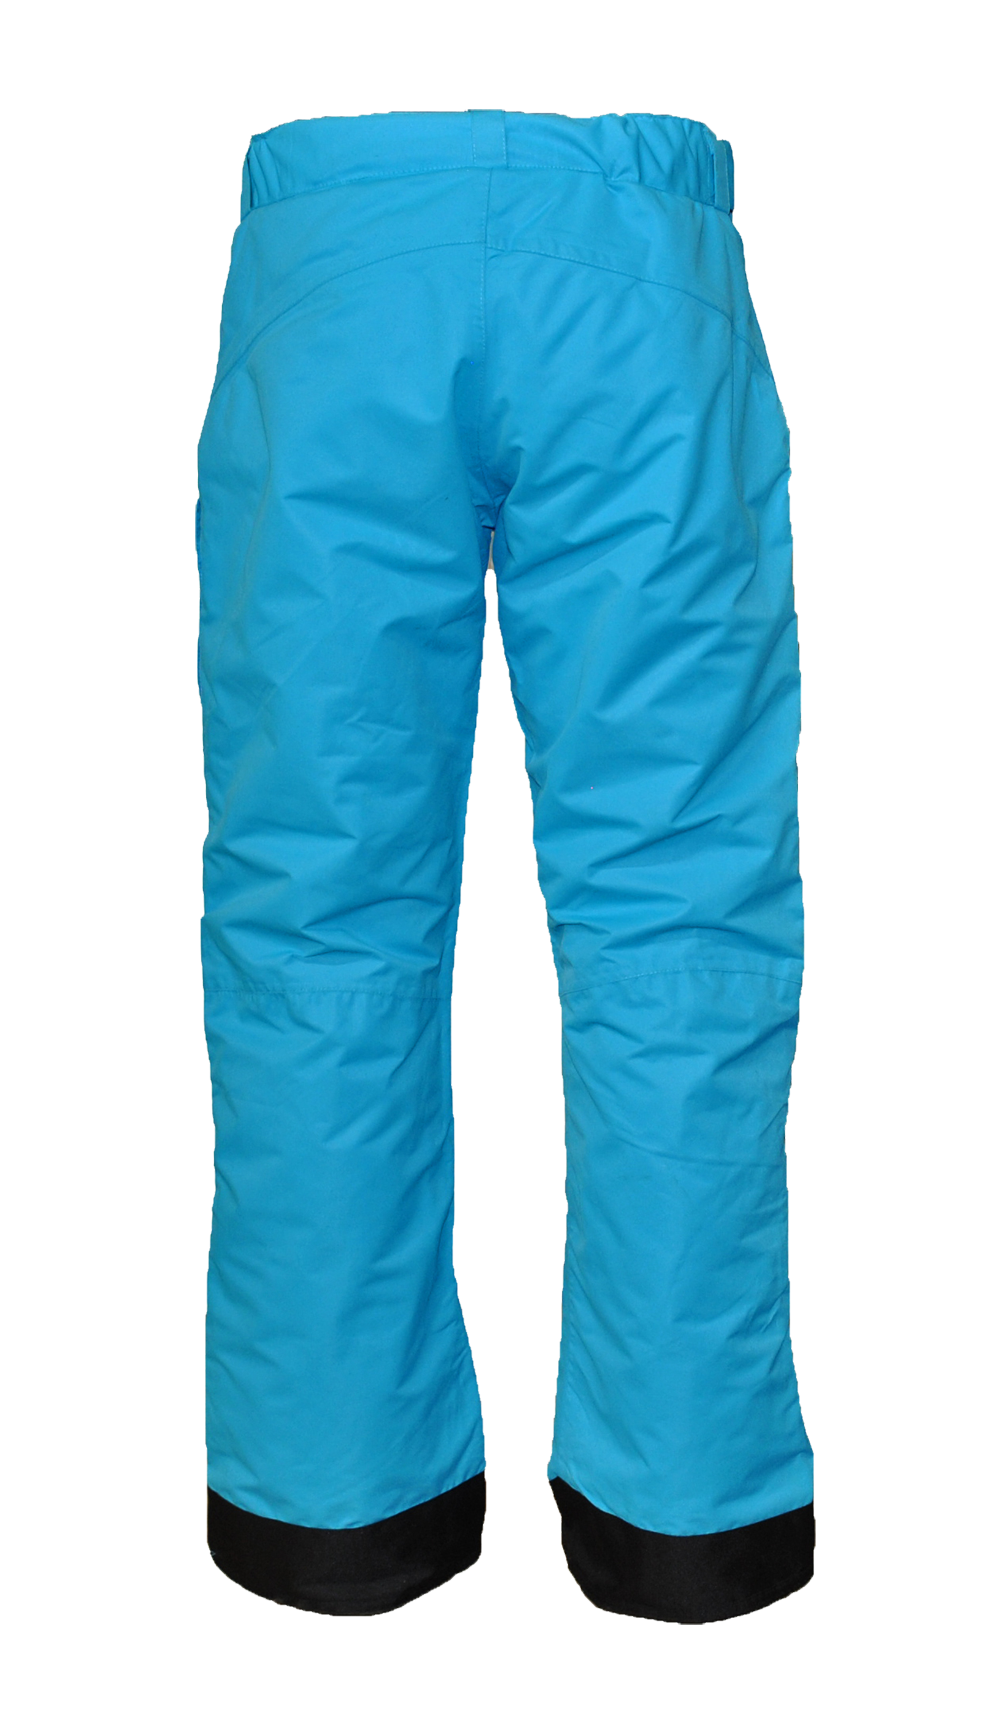 Womens 2X Turquoise Ski Bib Ski Pants Ski Trousers Warm Pant Snow Pants  Winter Skiing Clothing Winter Trousers Vintage Pants Sport 